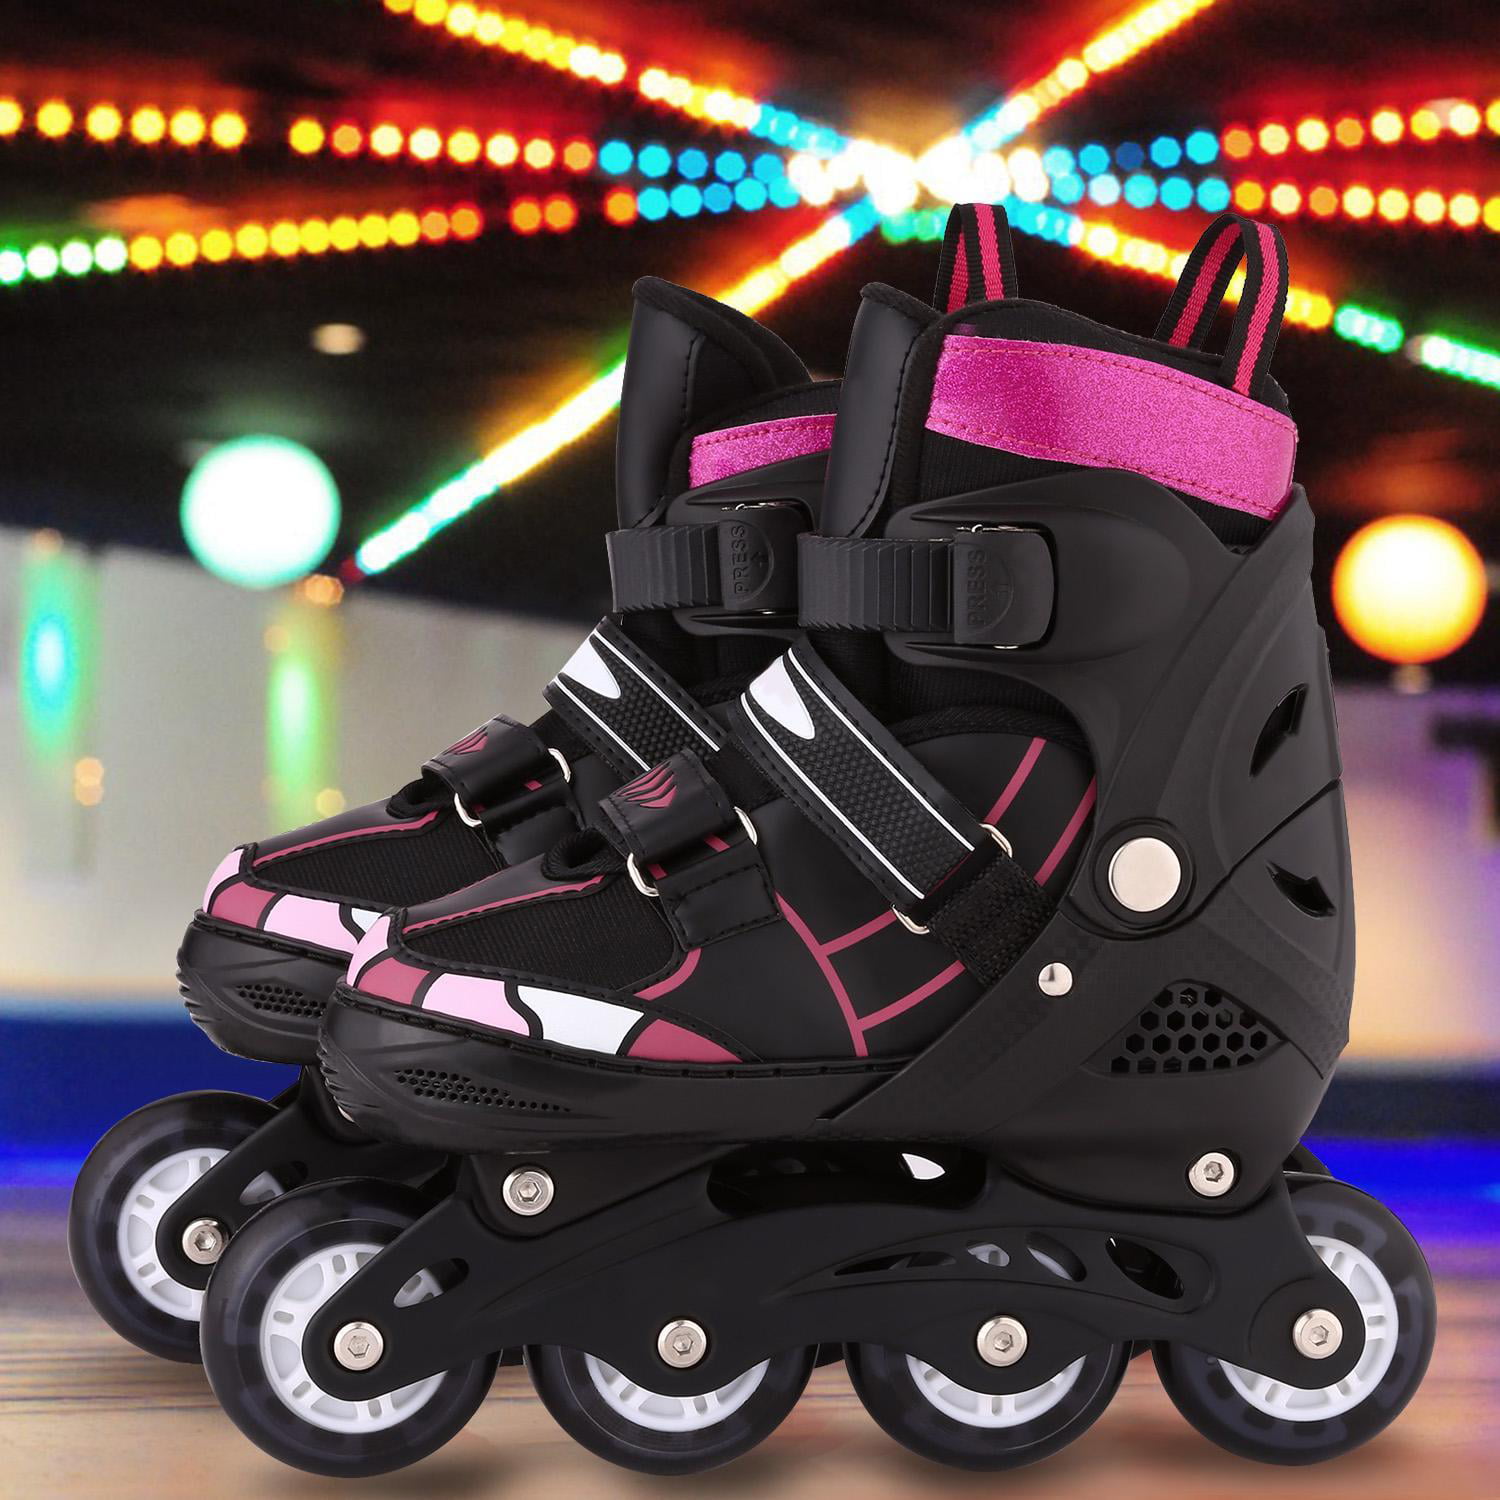 Roller Skates for Boys/Girls YF YOUFU Children Adjustable Inline Skates with Light up Wheels Safe Durable Outdoor Beginner Illuminating Roller Skates for Kids